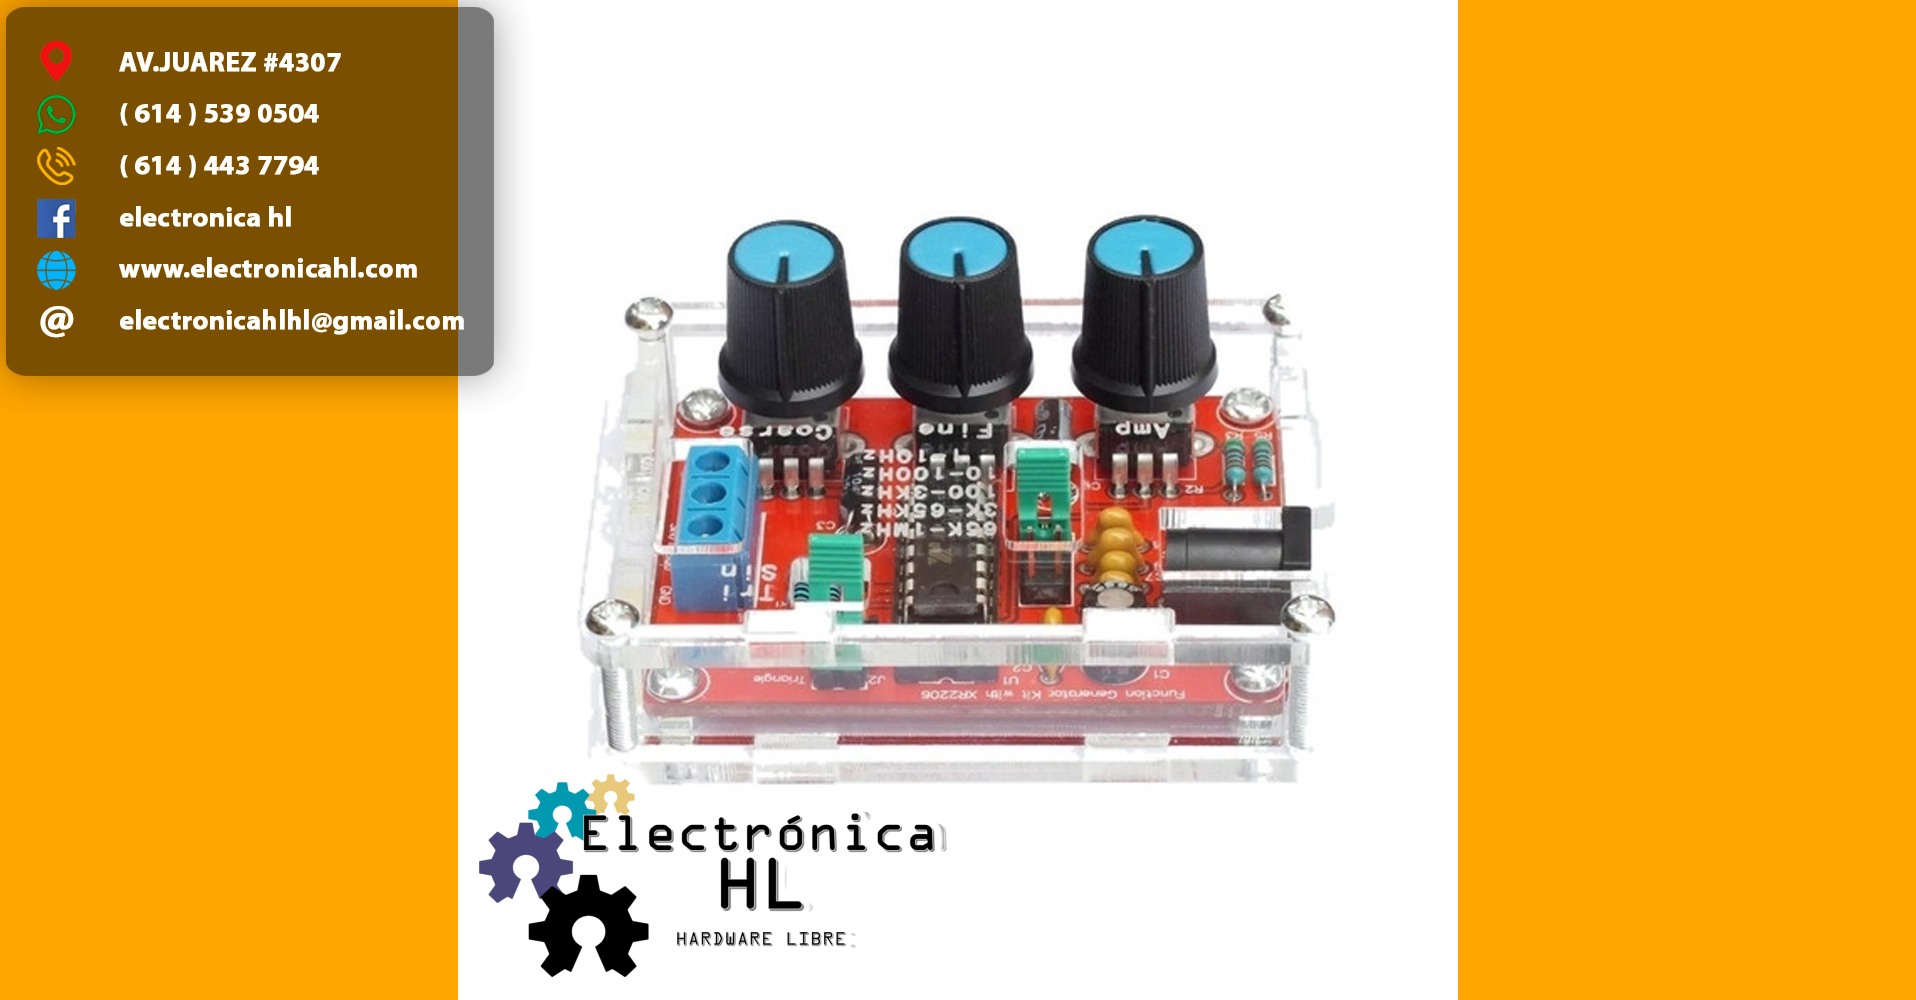 KITS DE ELECTRONICA – Electronica HL